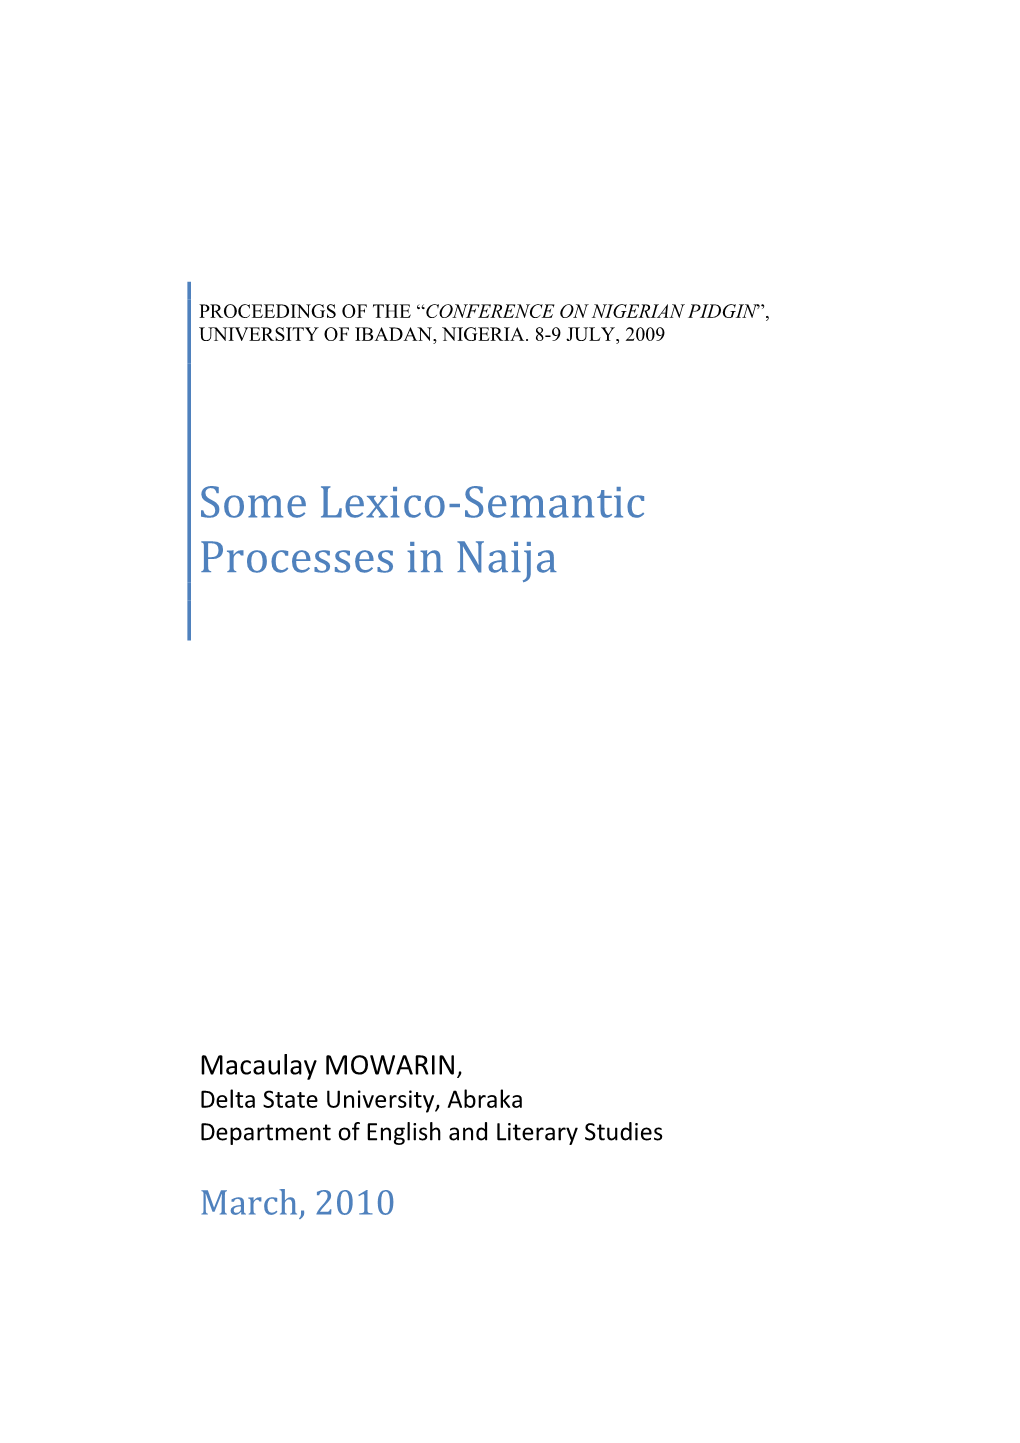 Some Lexico-Semantic Processes in Naija